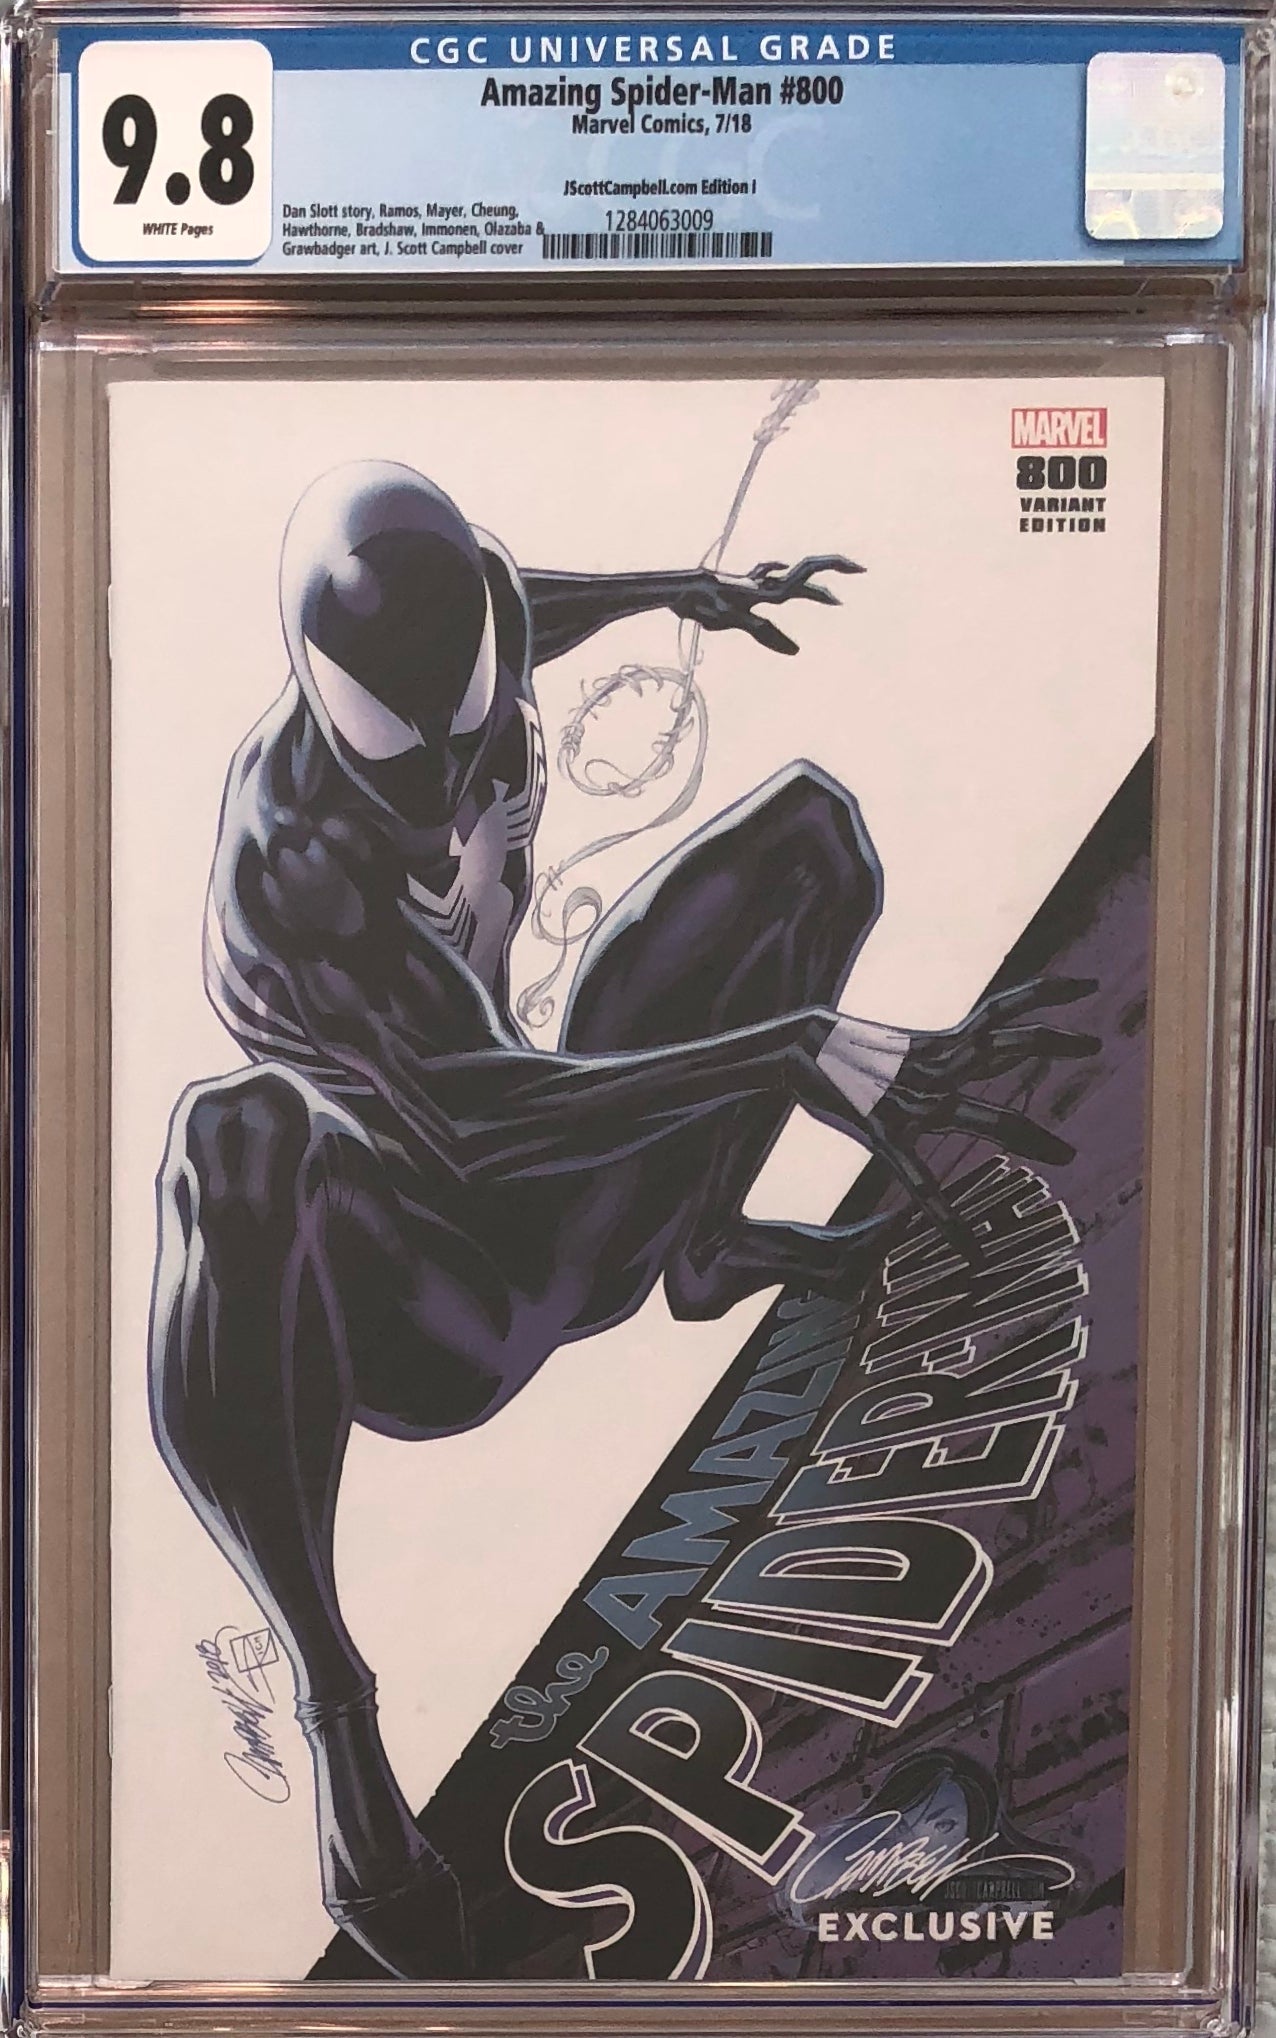 Amazing Spider-Man #800 J. Scott Campbell Edition I "Black Spider-Man" SDCC Exclusive CGC 9.8